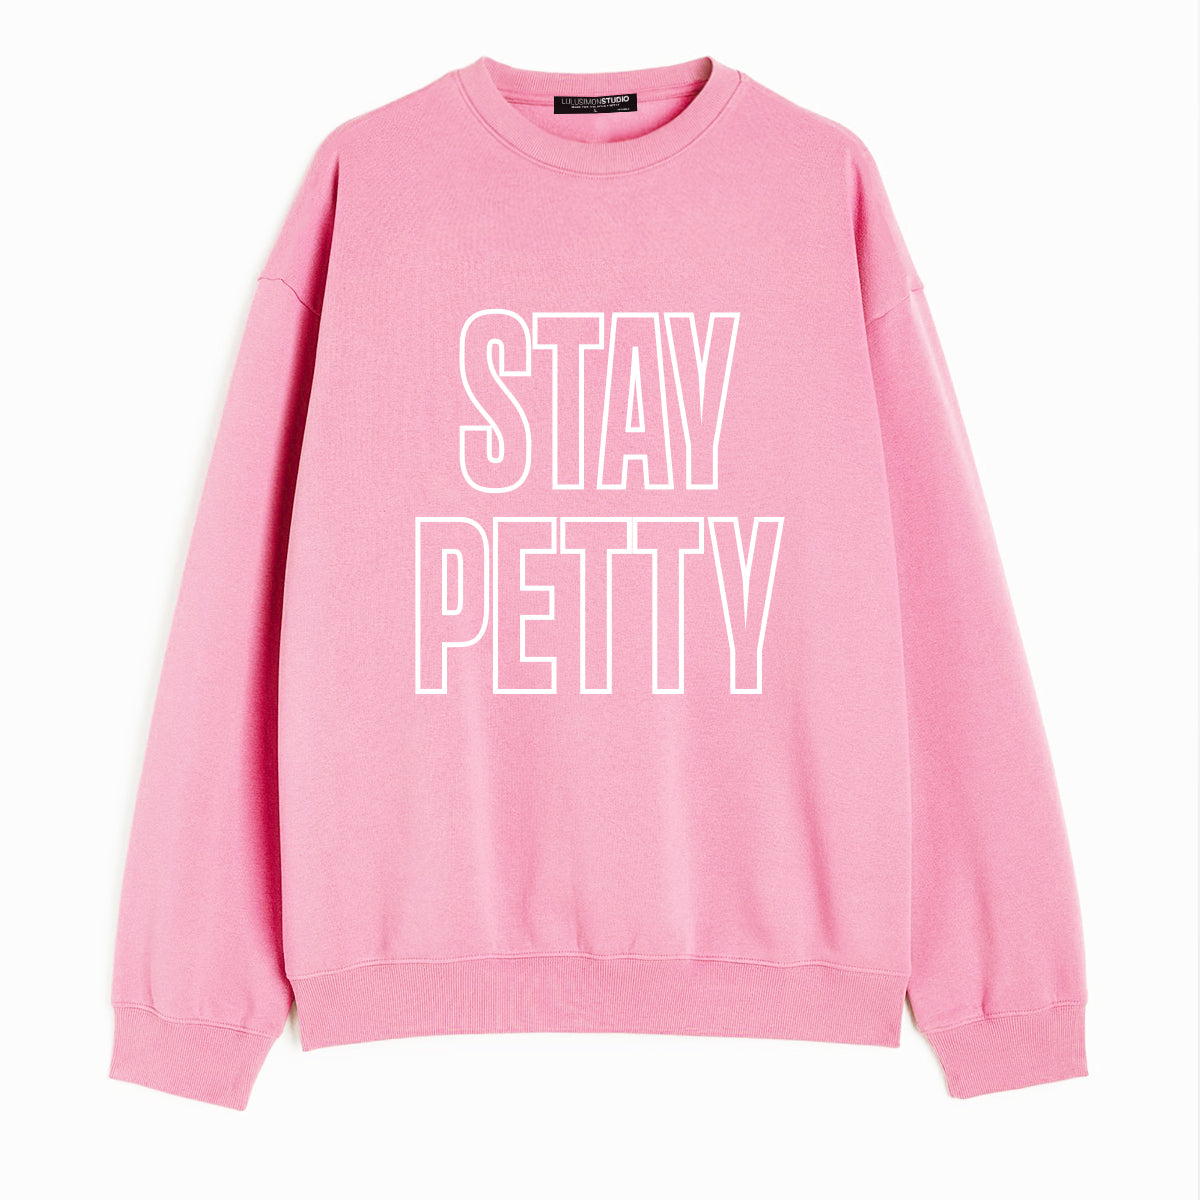 Stay Petty Sweatshirt